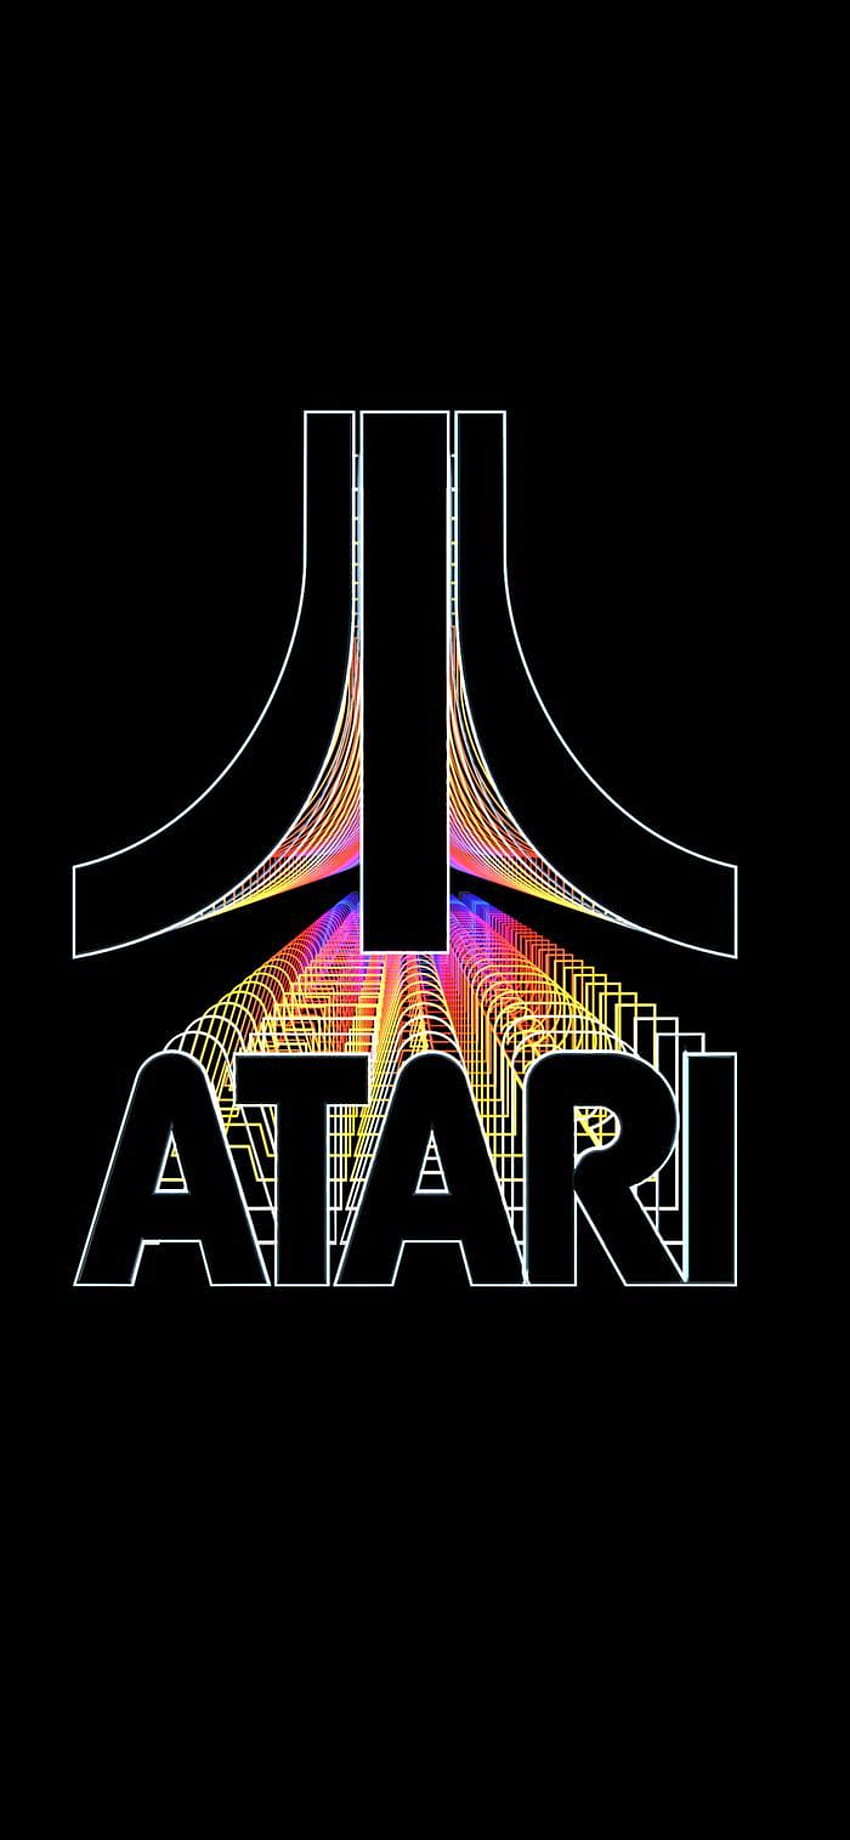 Logotipo de Atari - Póster de juegos retro fondo de pantalla del teléfono